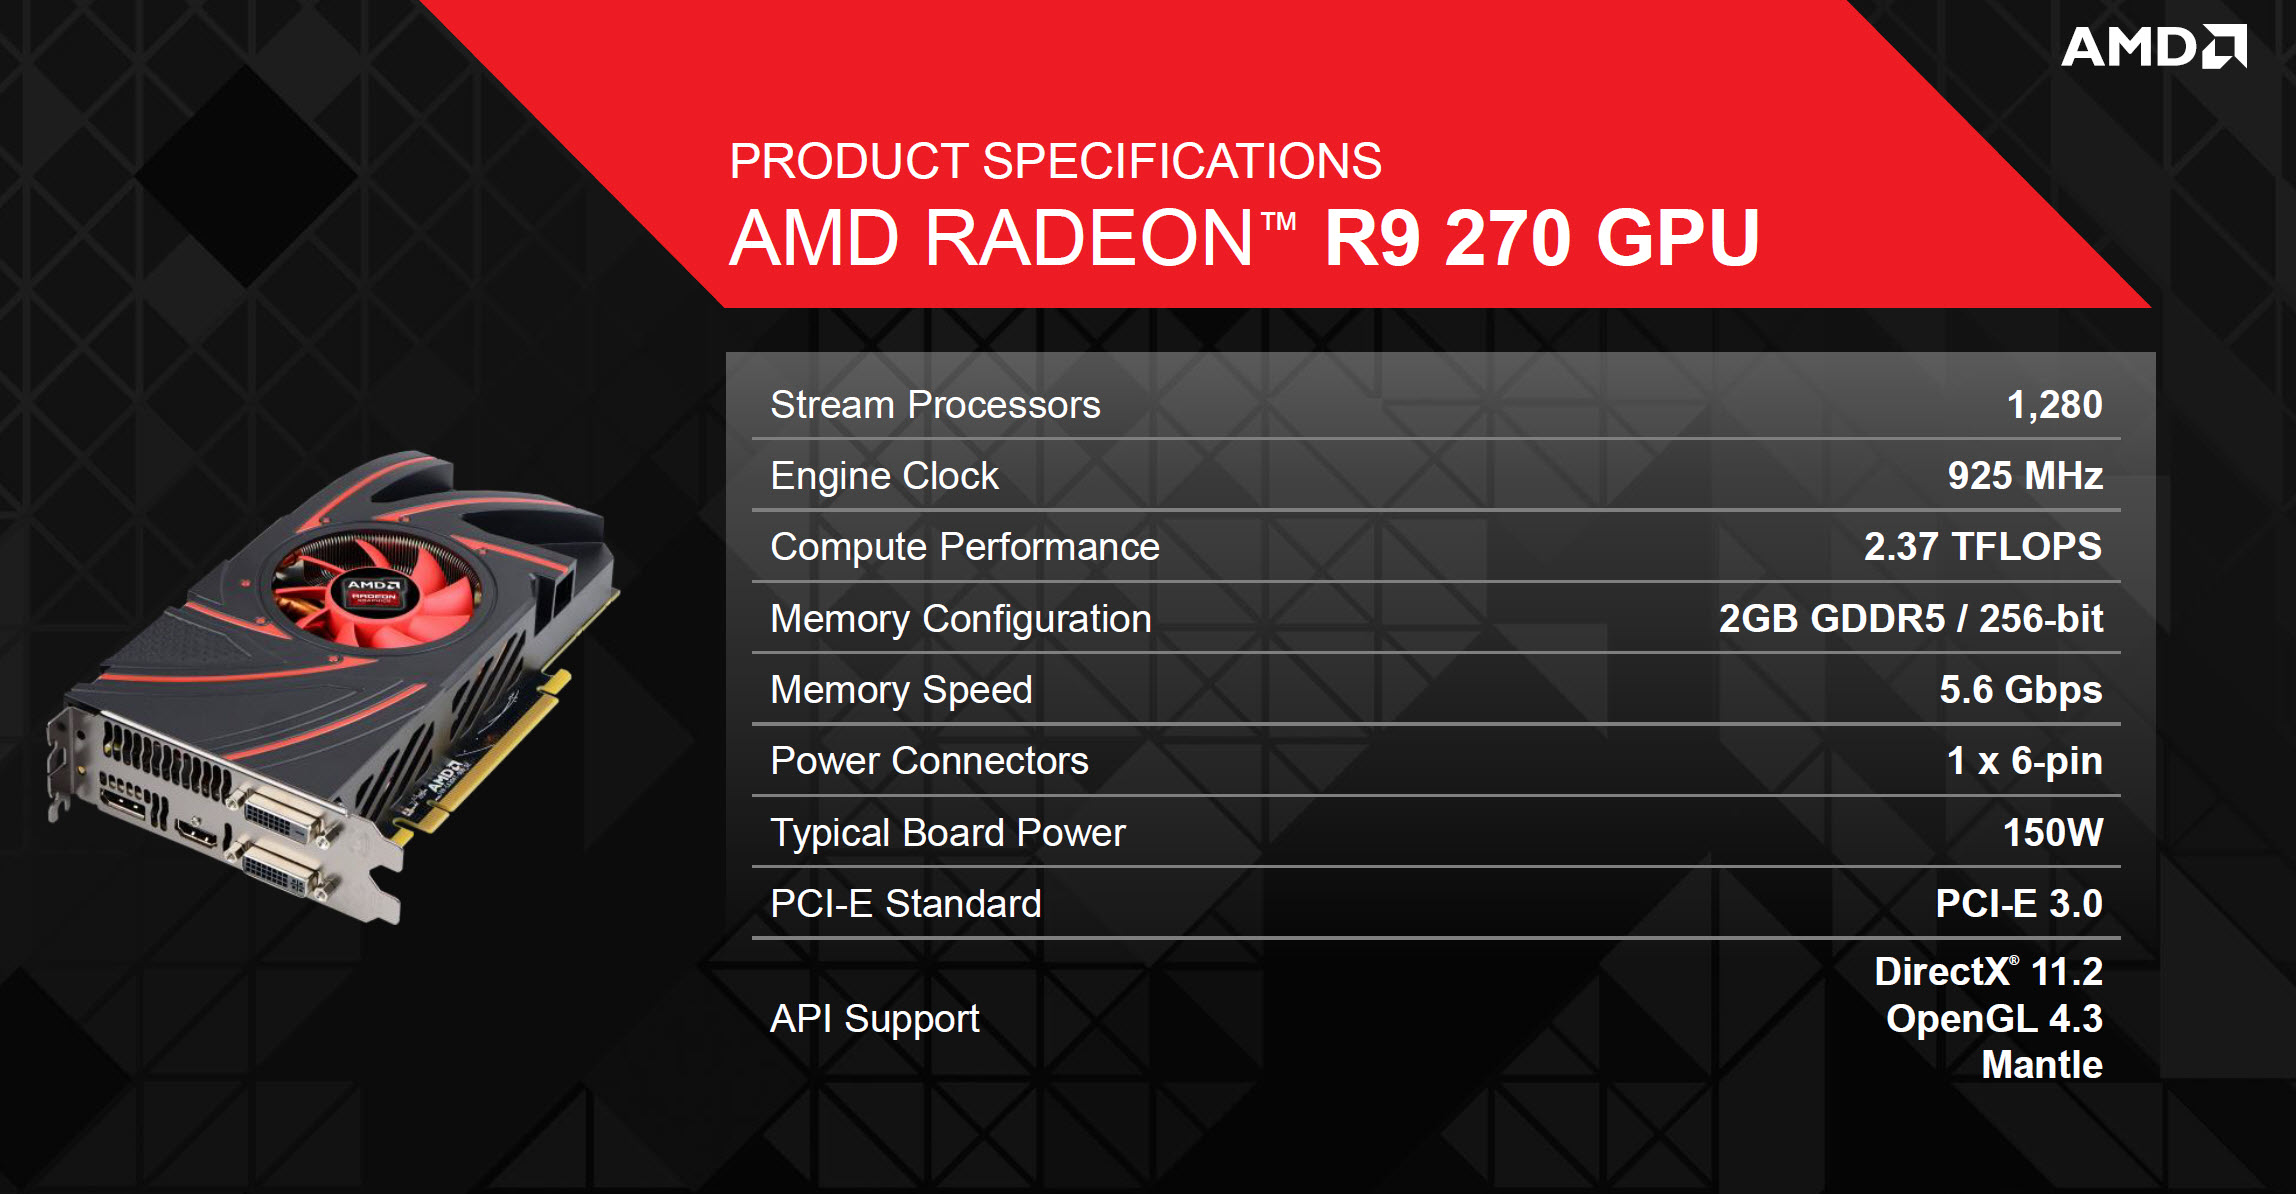 Amd Launches Radeon R9 270 For 179 Videocardz Com